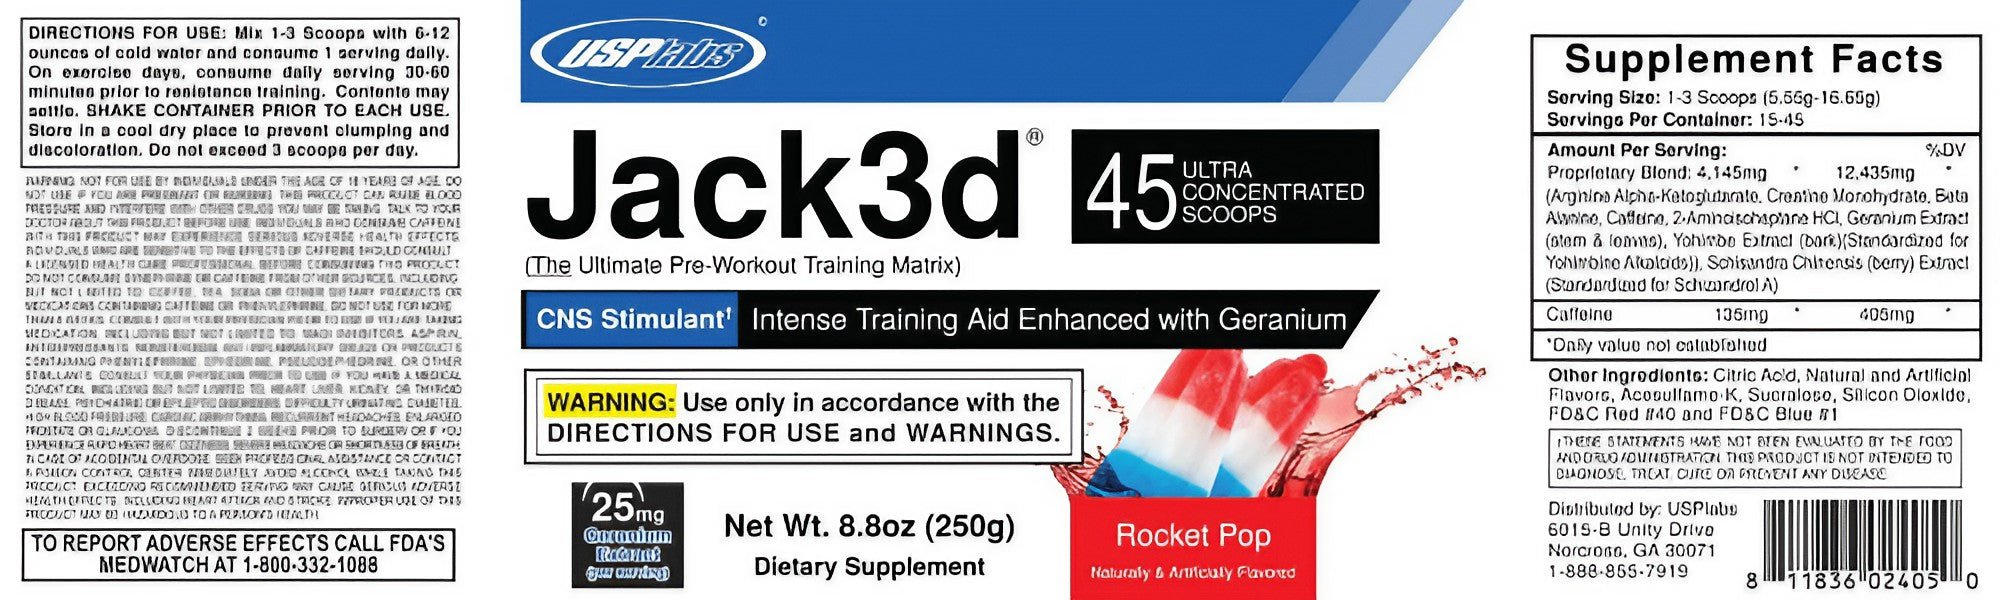 Nutritional information label on Jack3d pre-workout 45 servings package